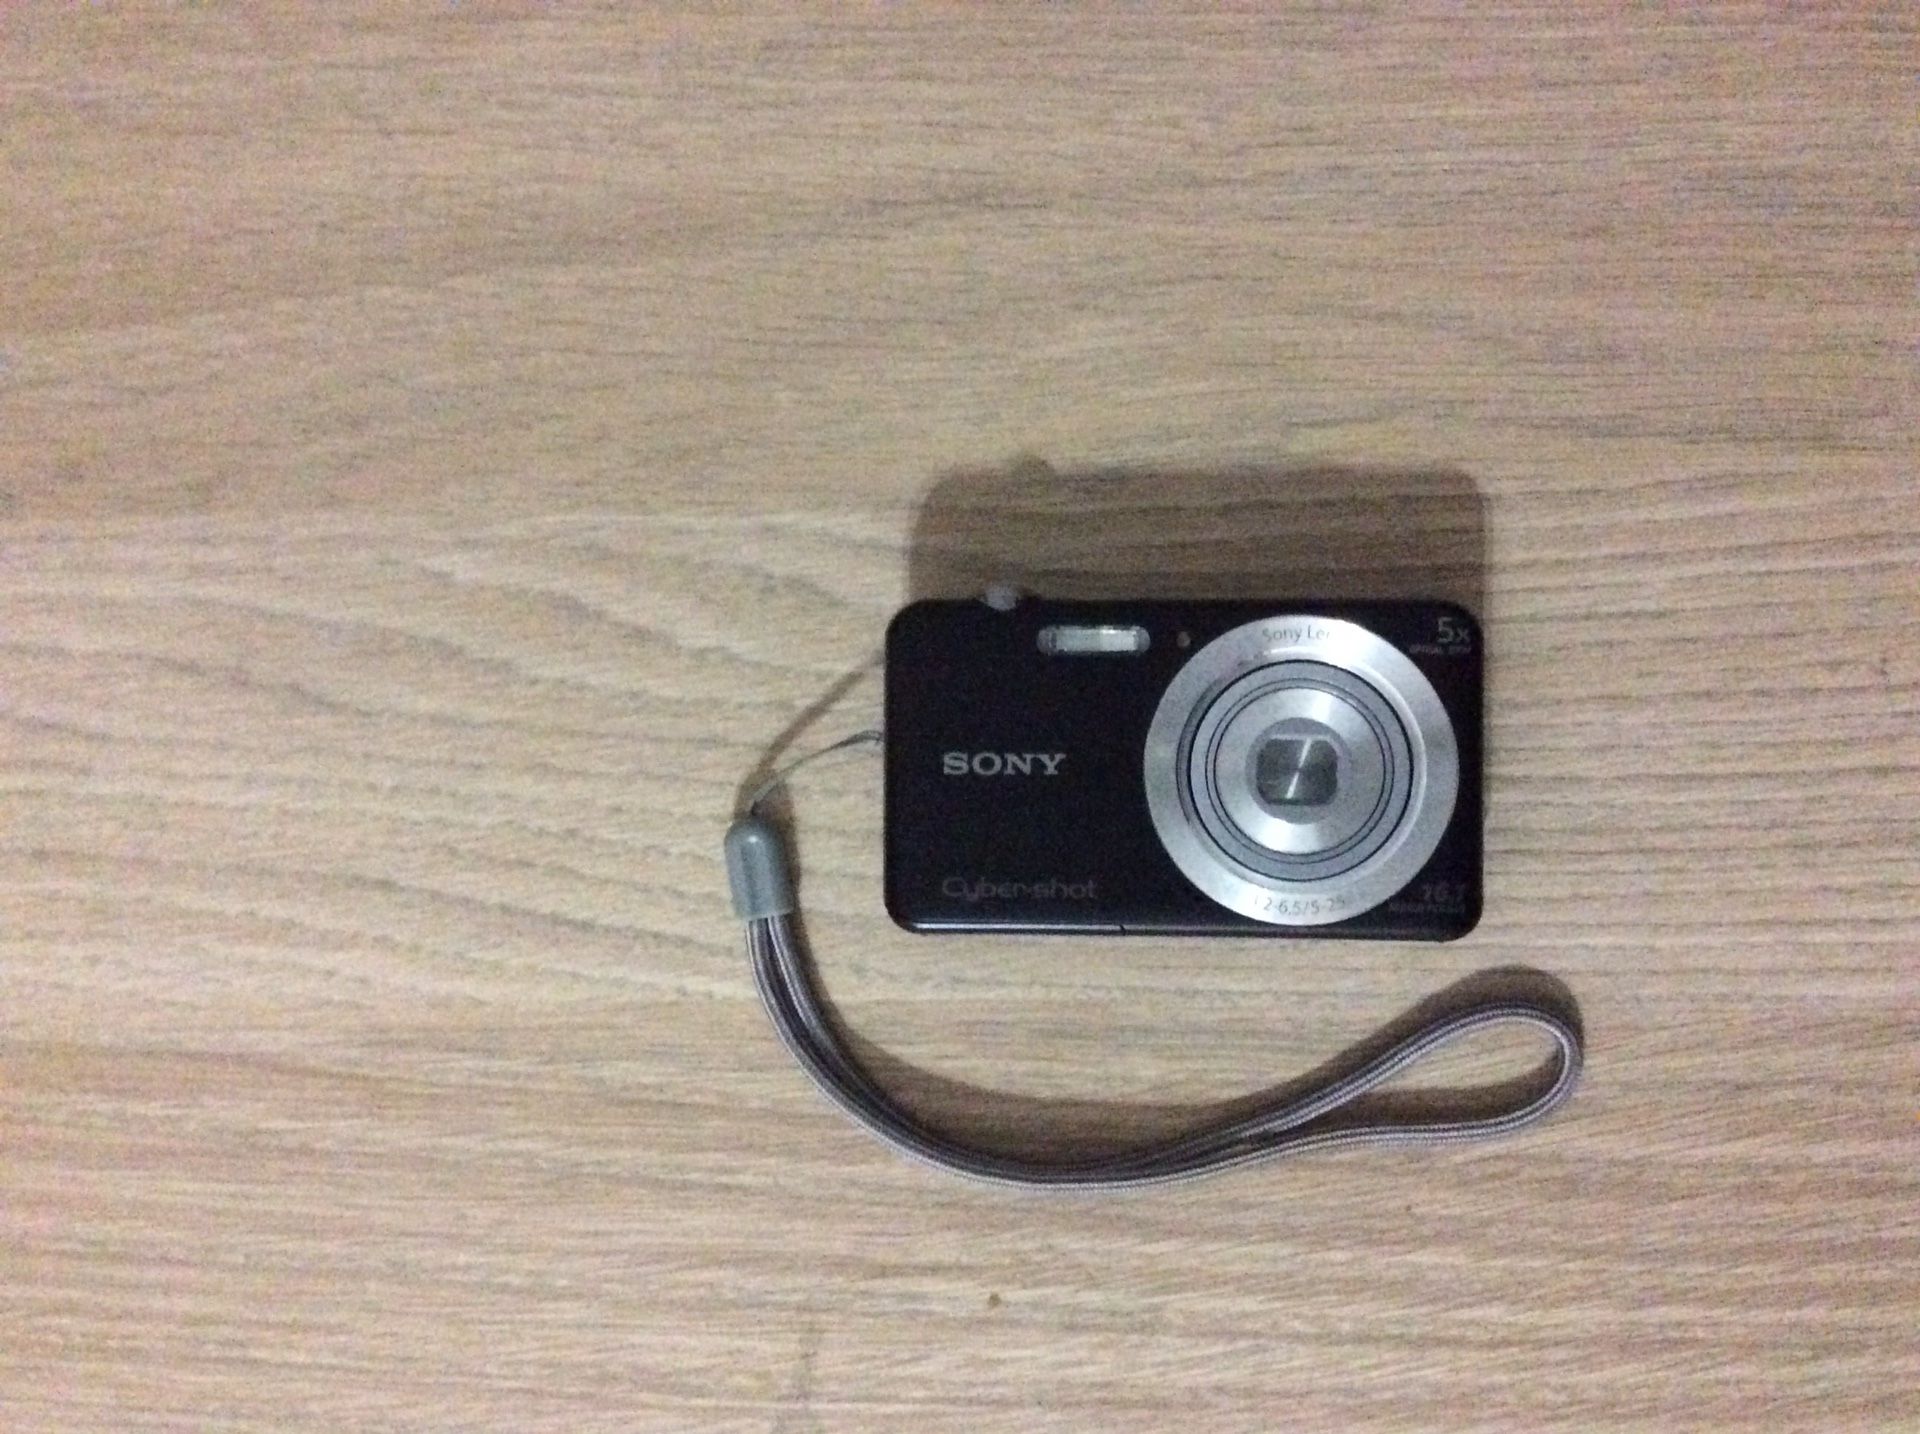 Sony camera ( Cyber Shot)